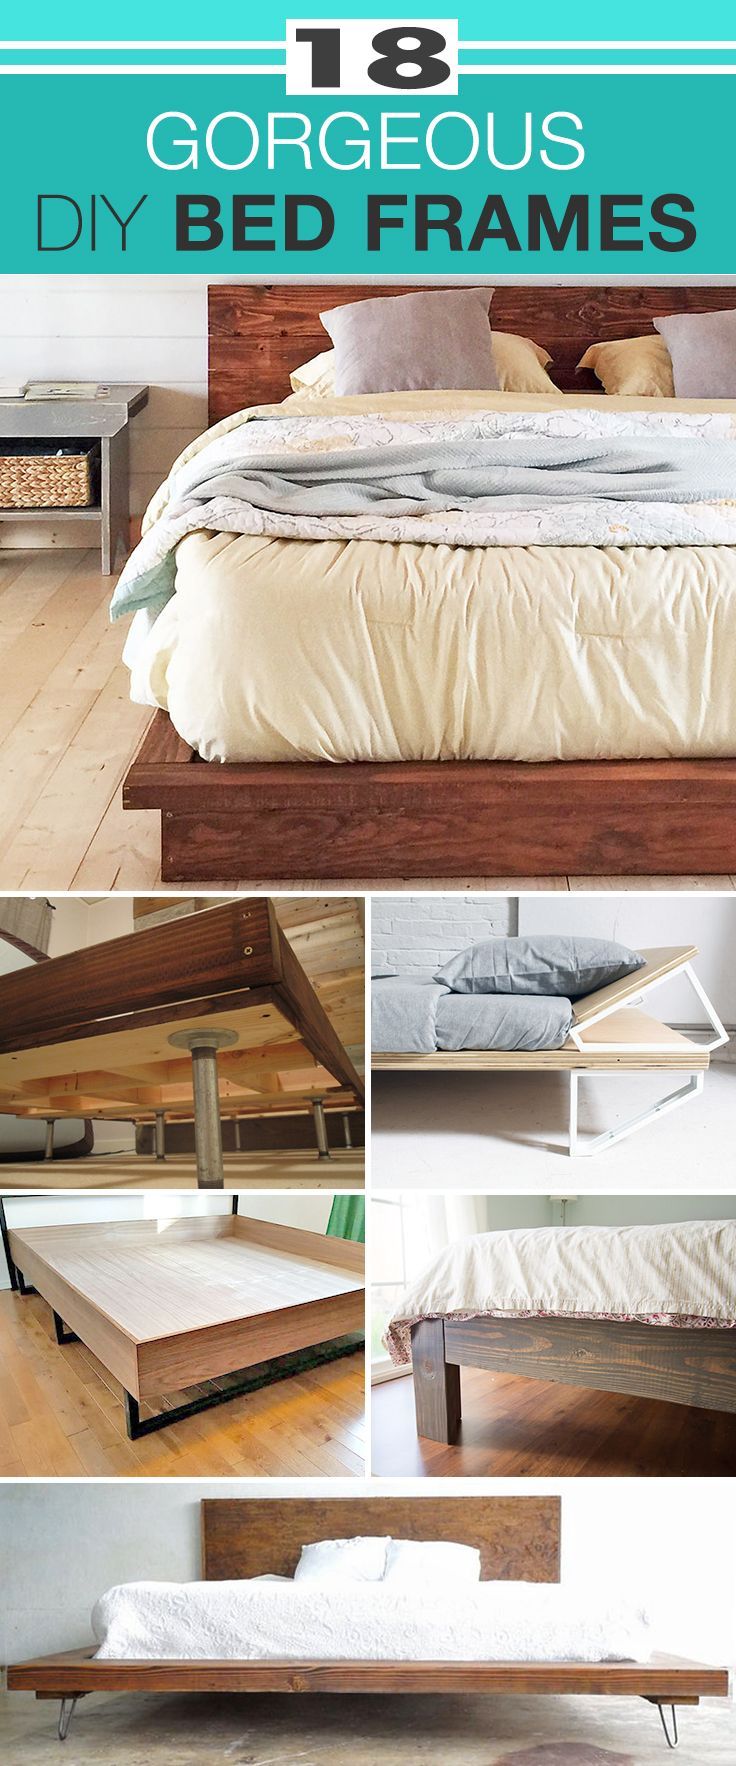 18 Gorgeous DIY Bed Frames